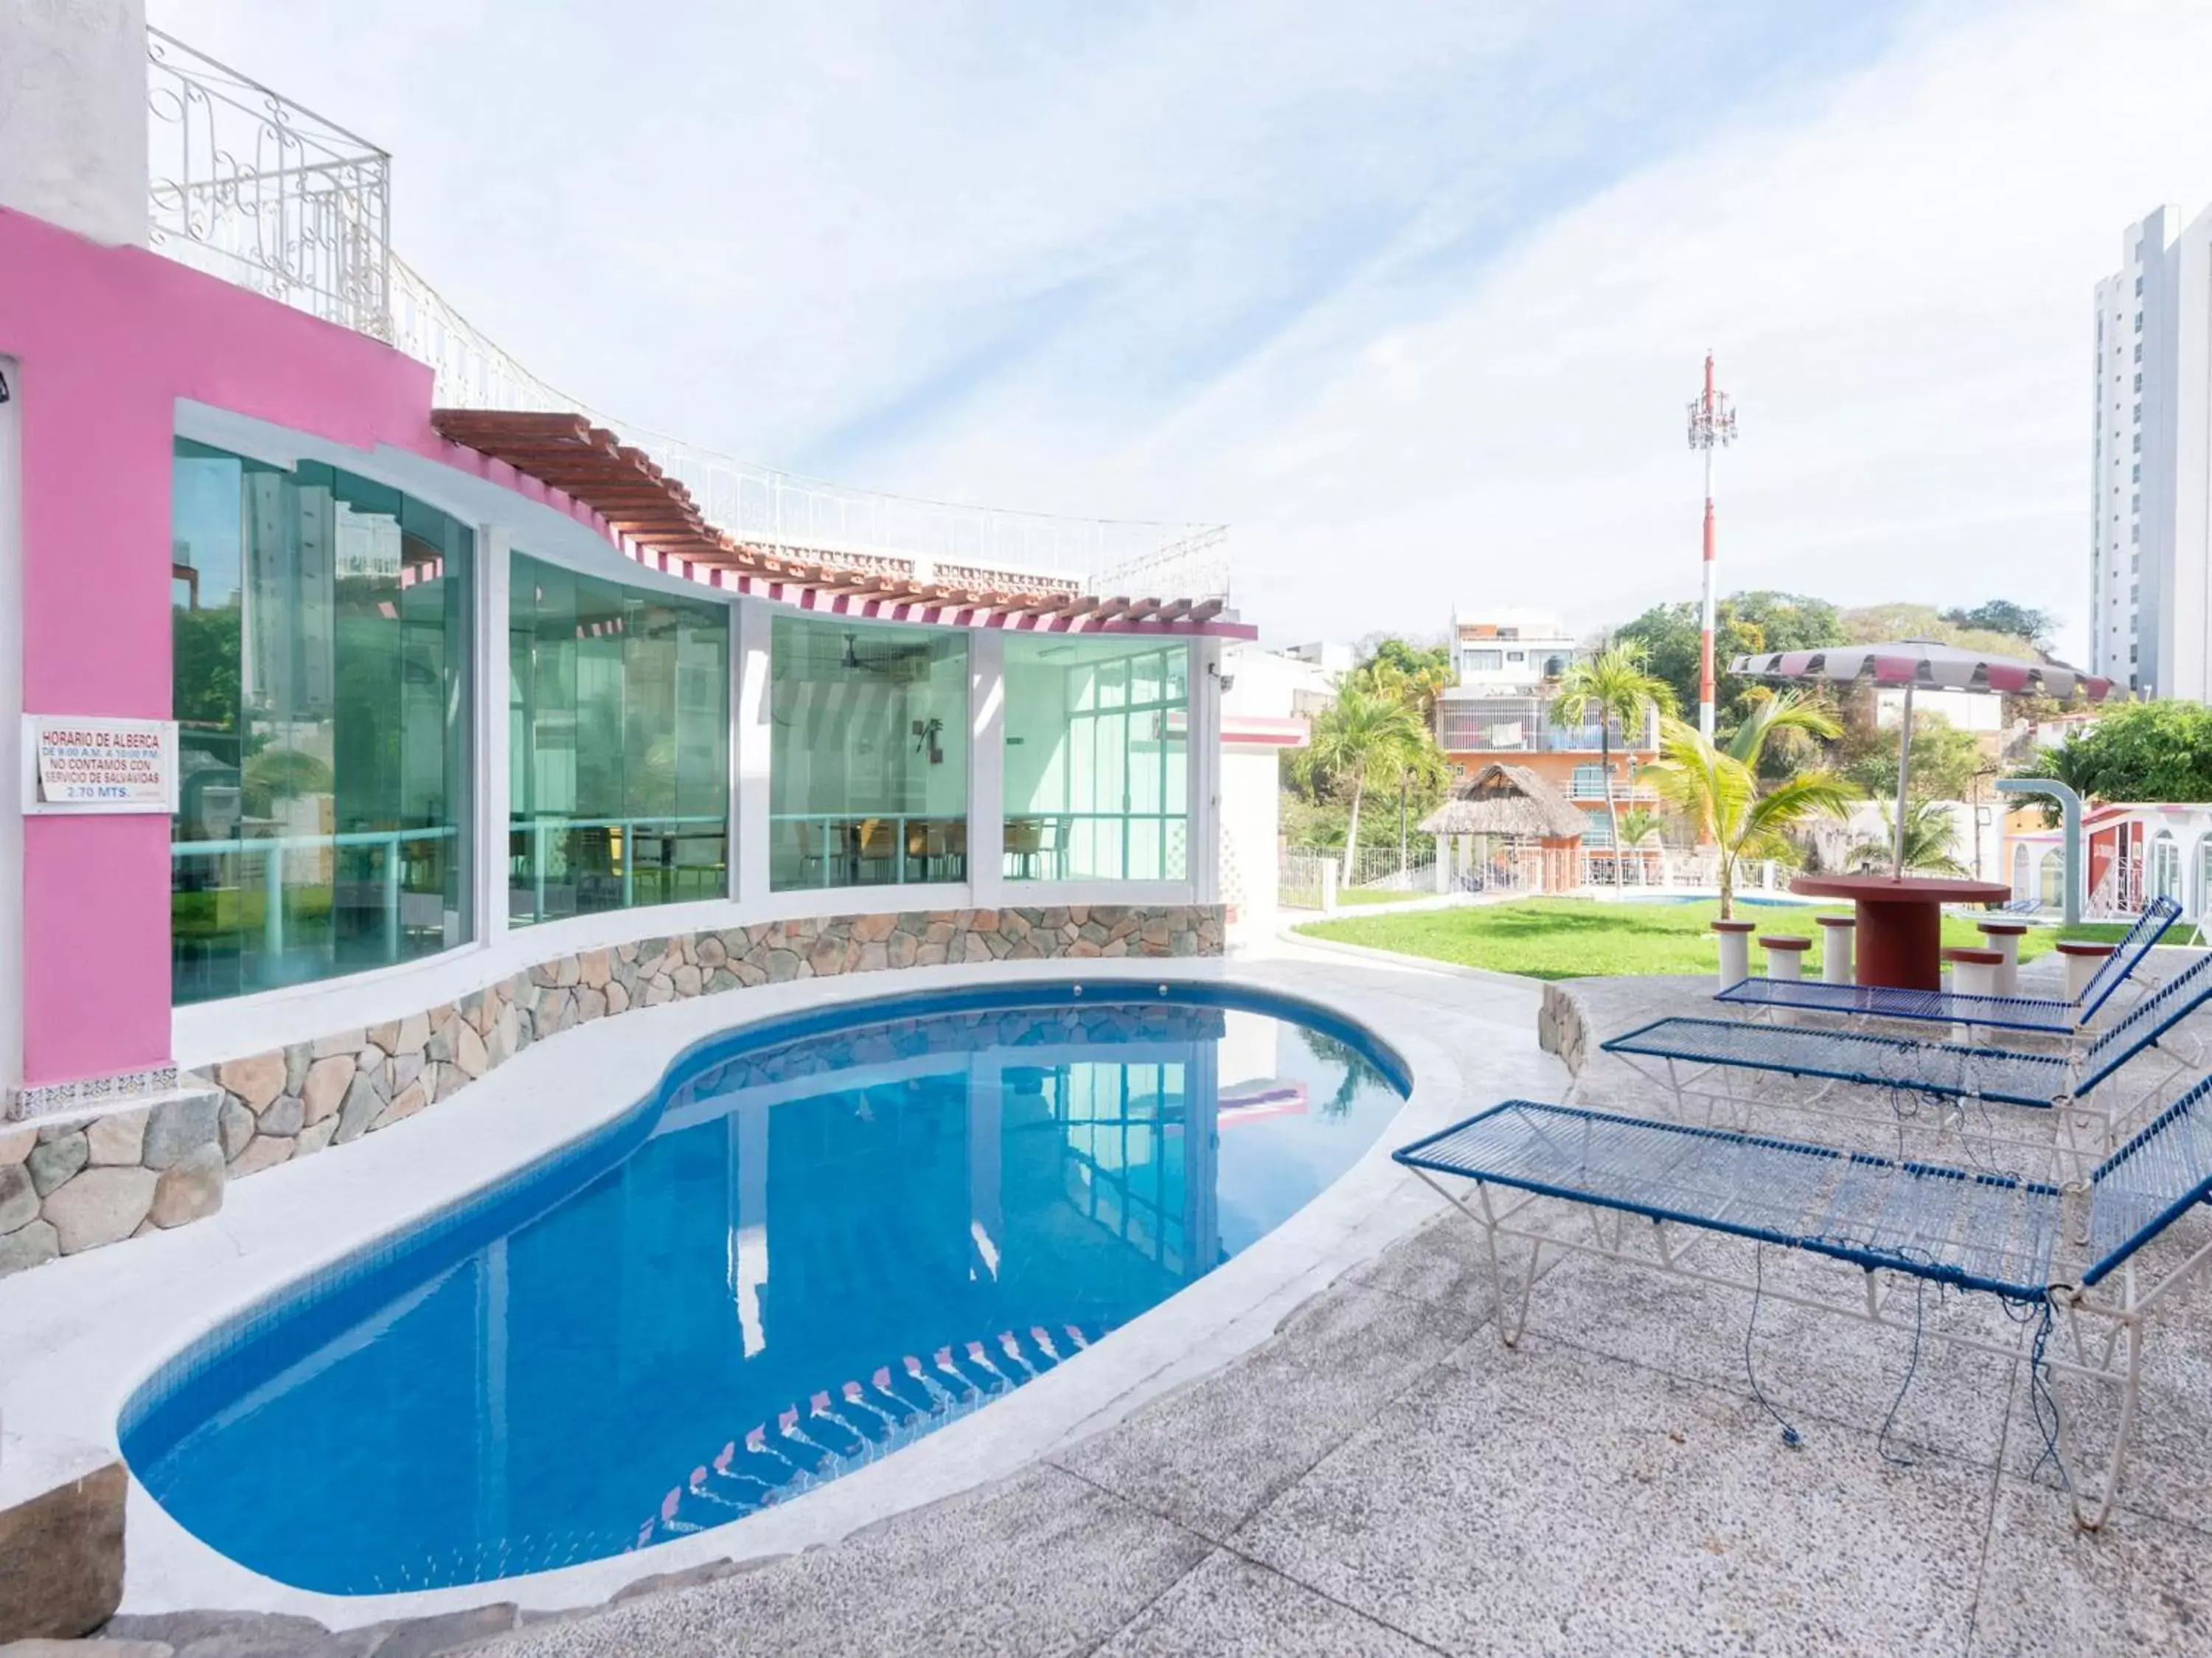 Swimming Pool in Capital O Hotel El Mejicano, Acapulco